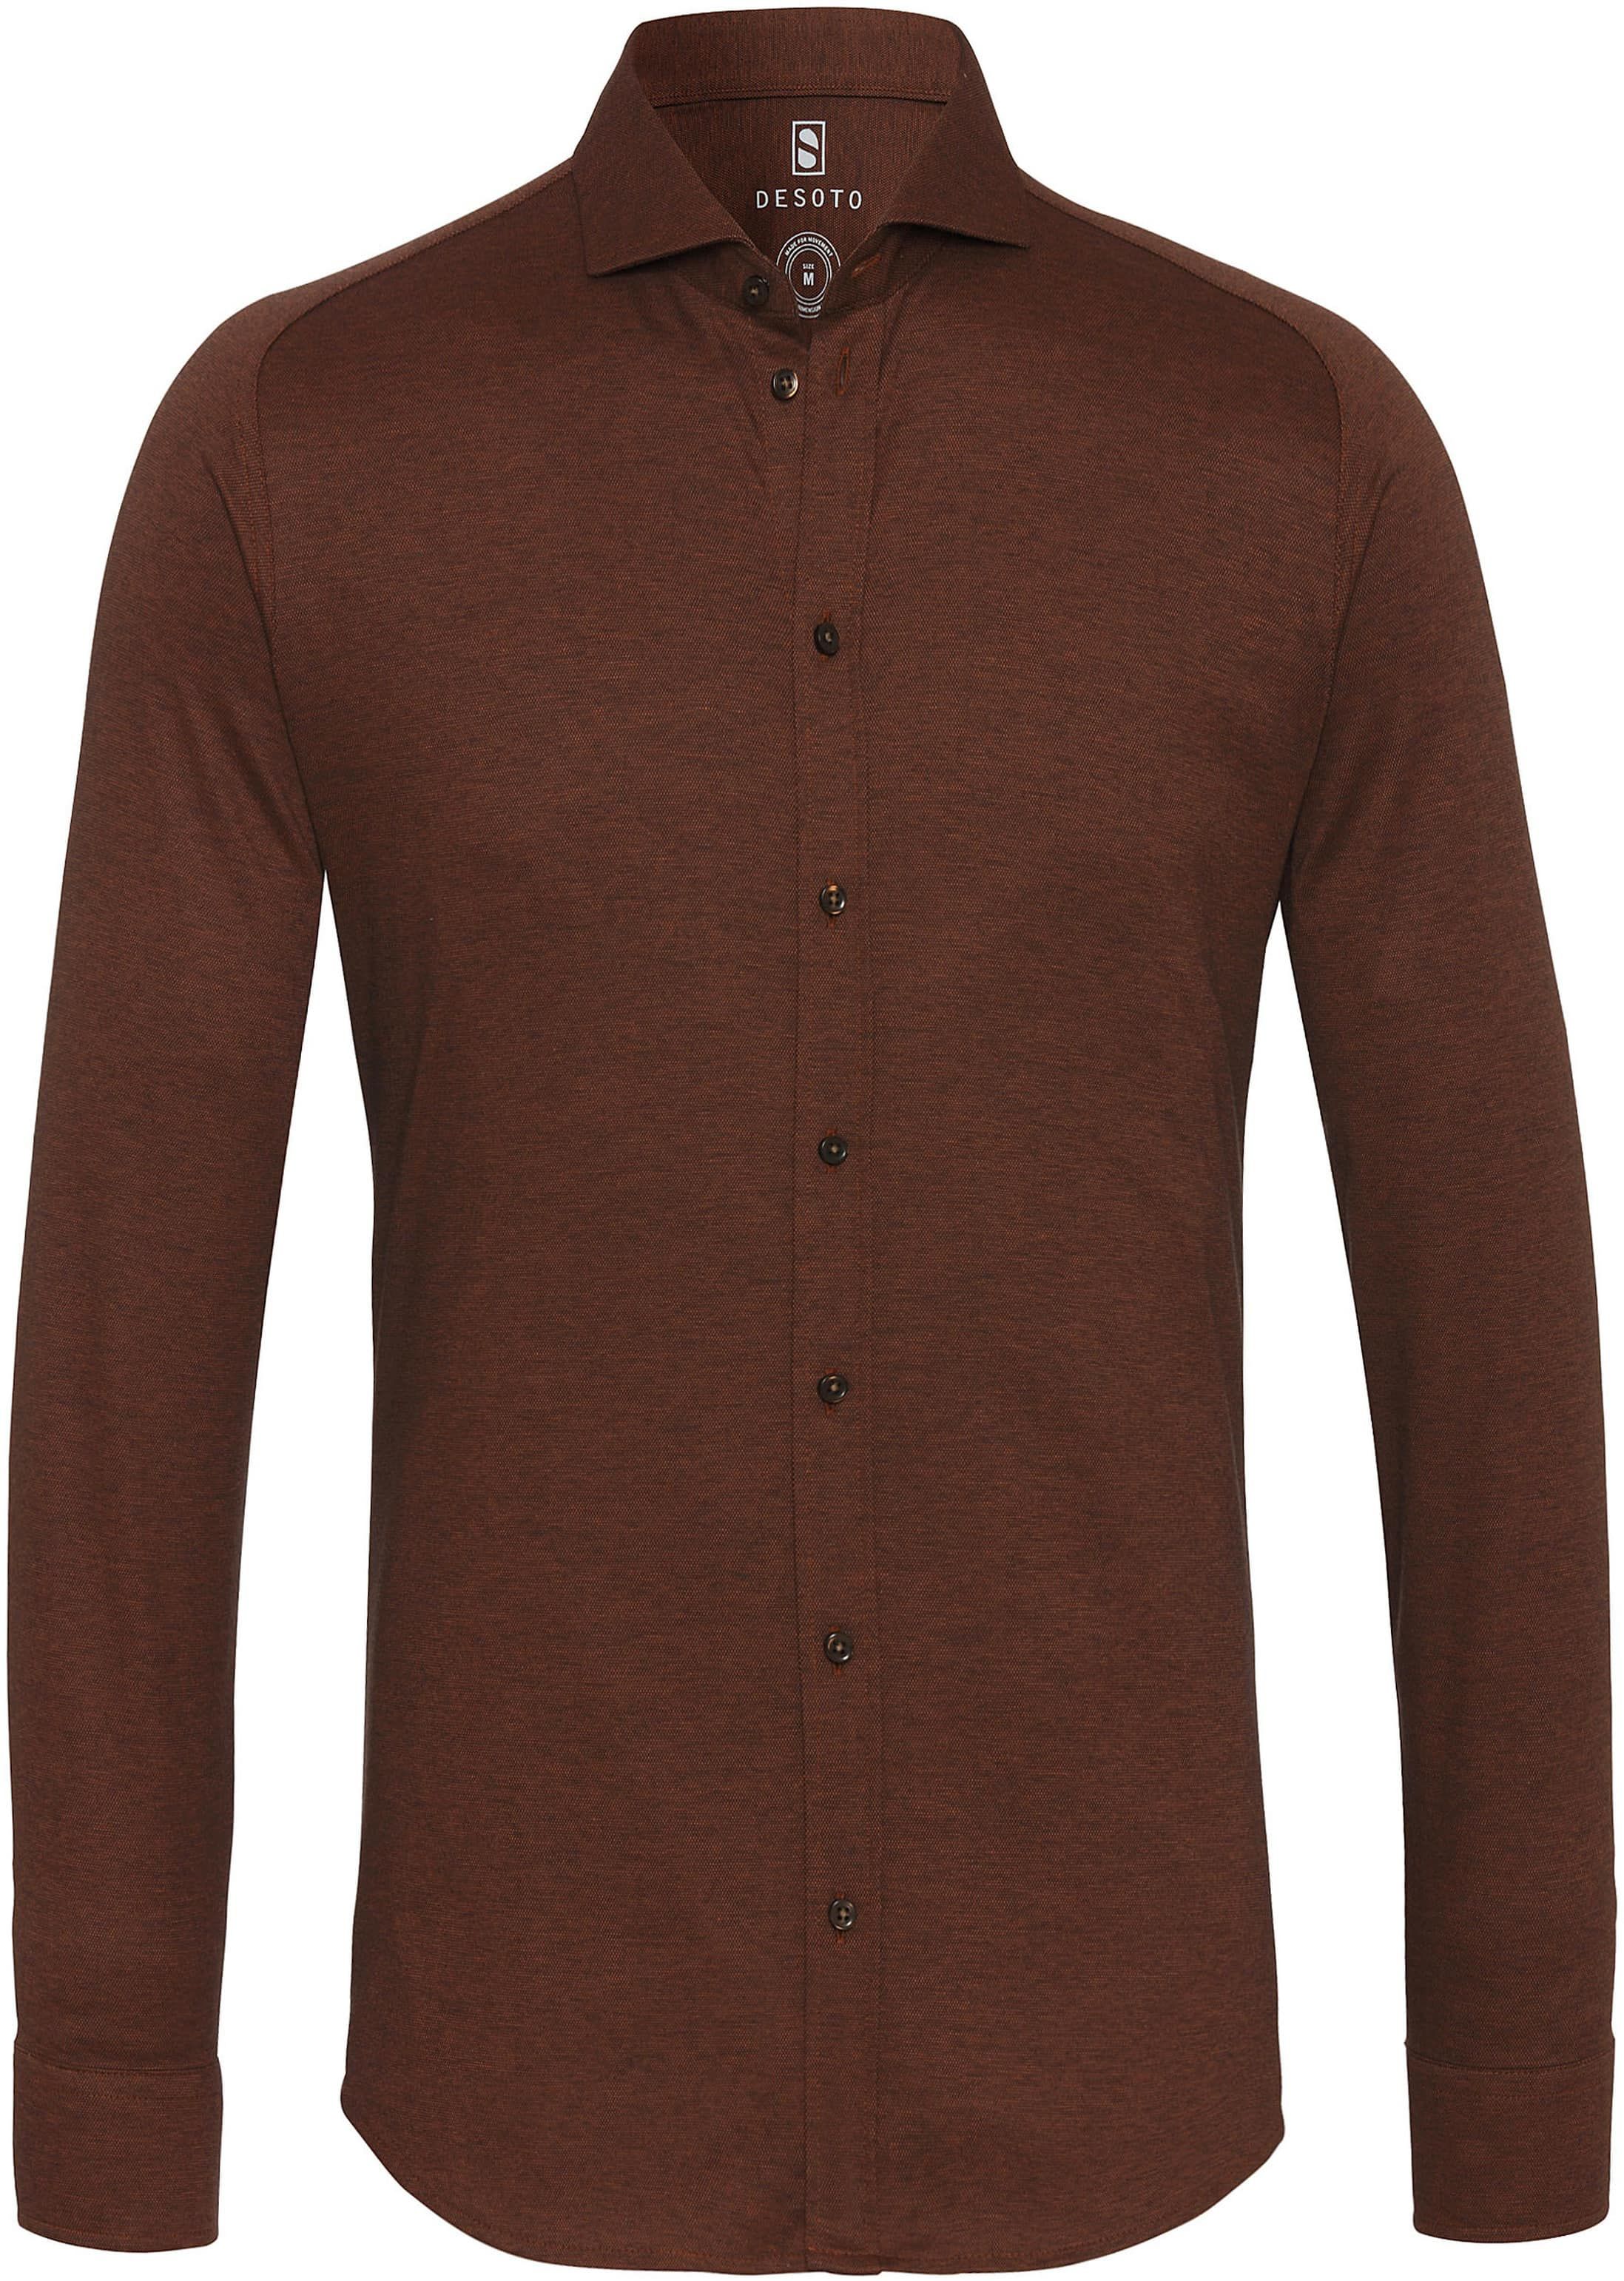 Desoto Shirt Non Iron 851 Brown size S